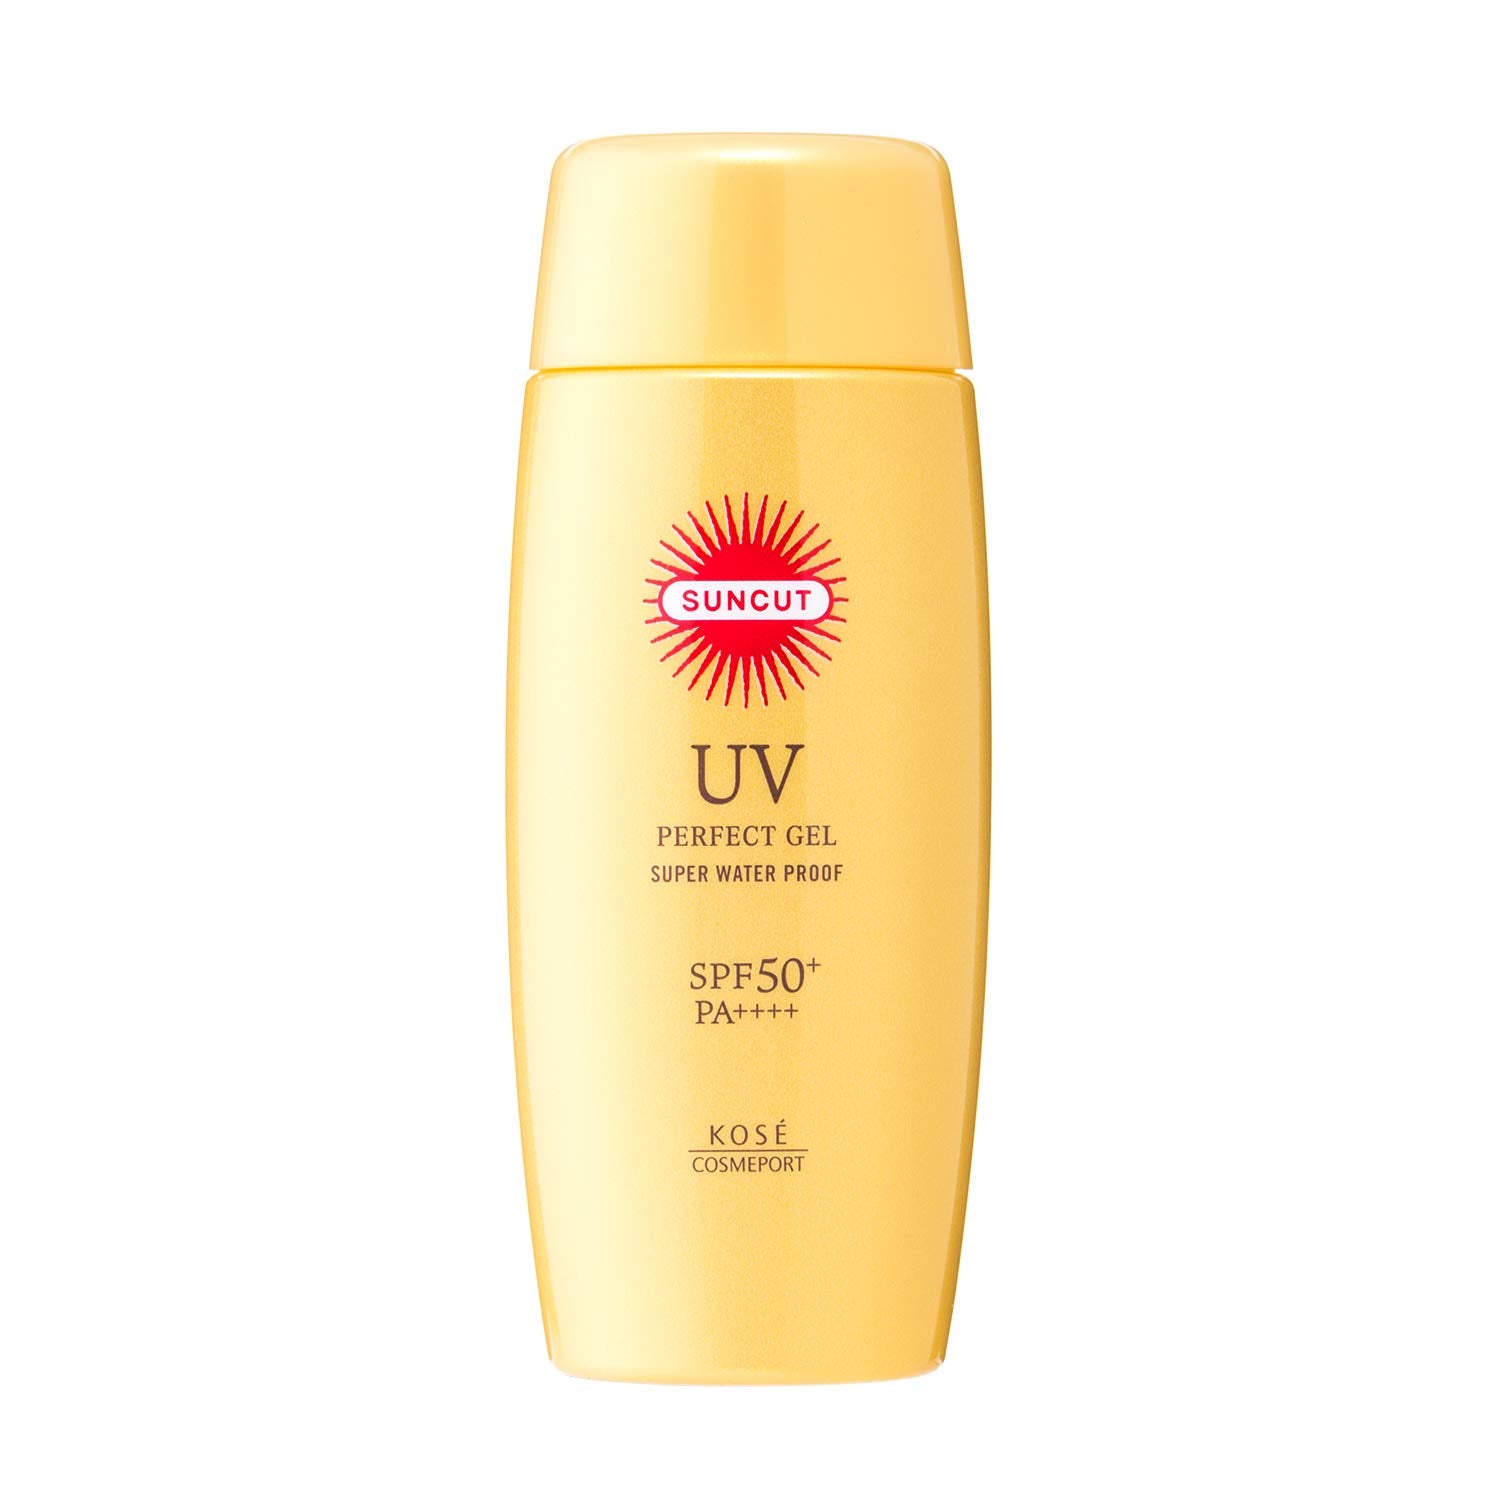 Kose Cosmeport Suncut Protect UV Gel Super Waterproof SPF 50+ PA++++ Beauty Kose   